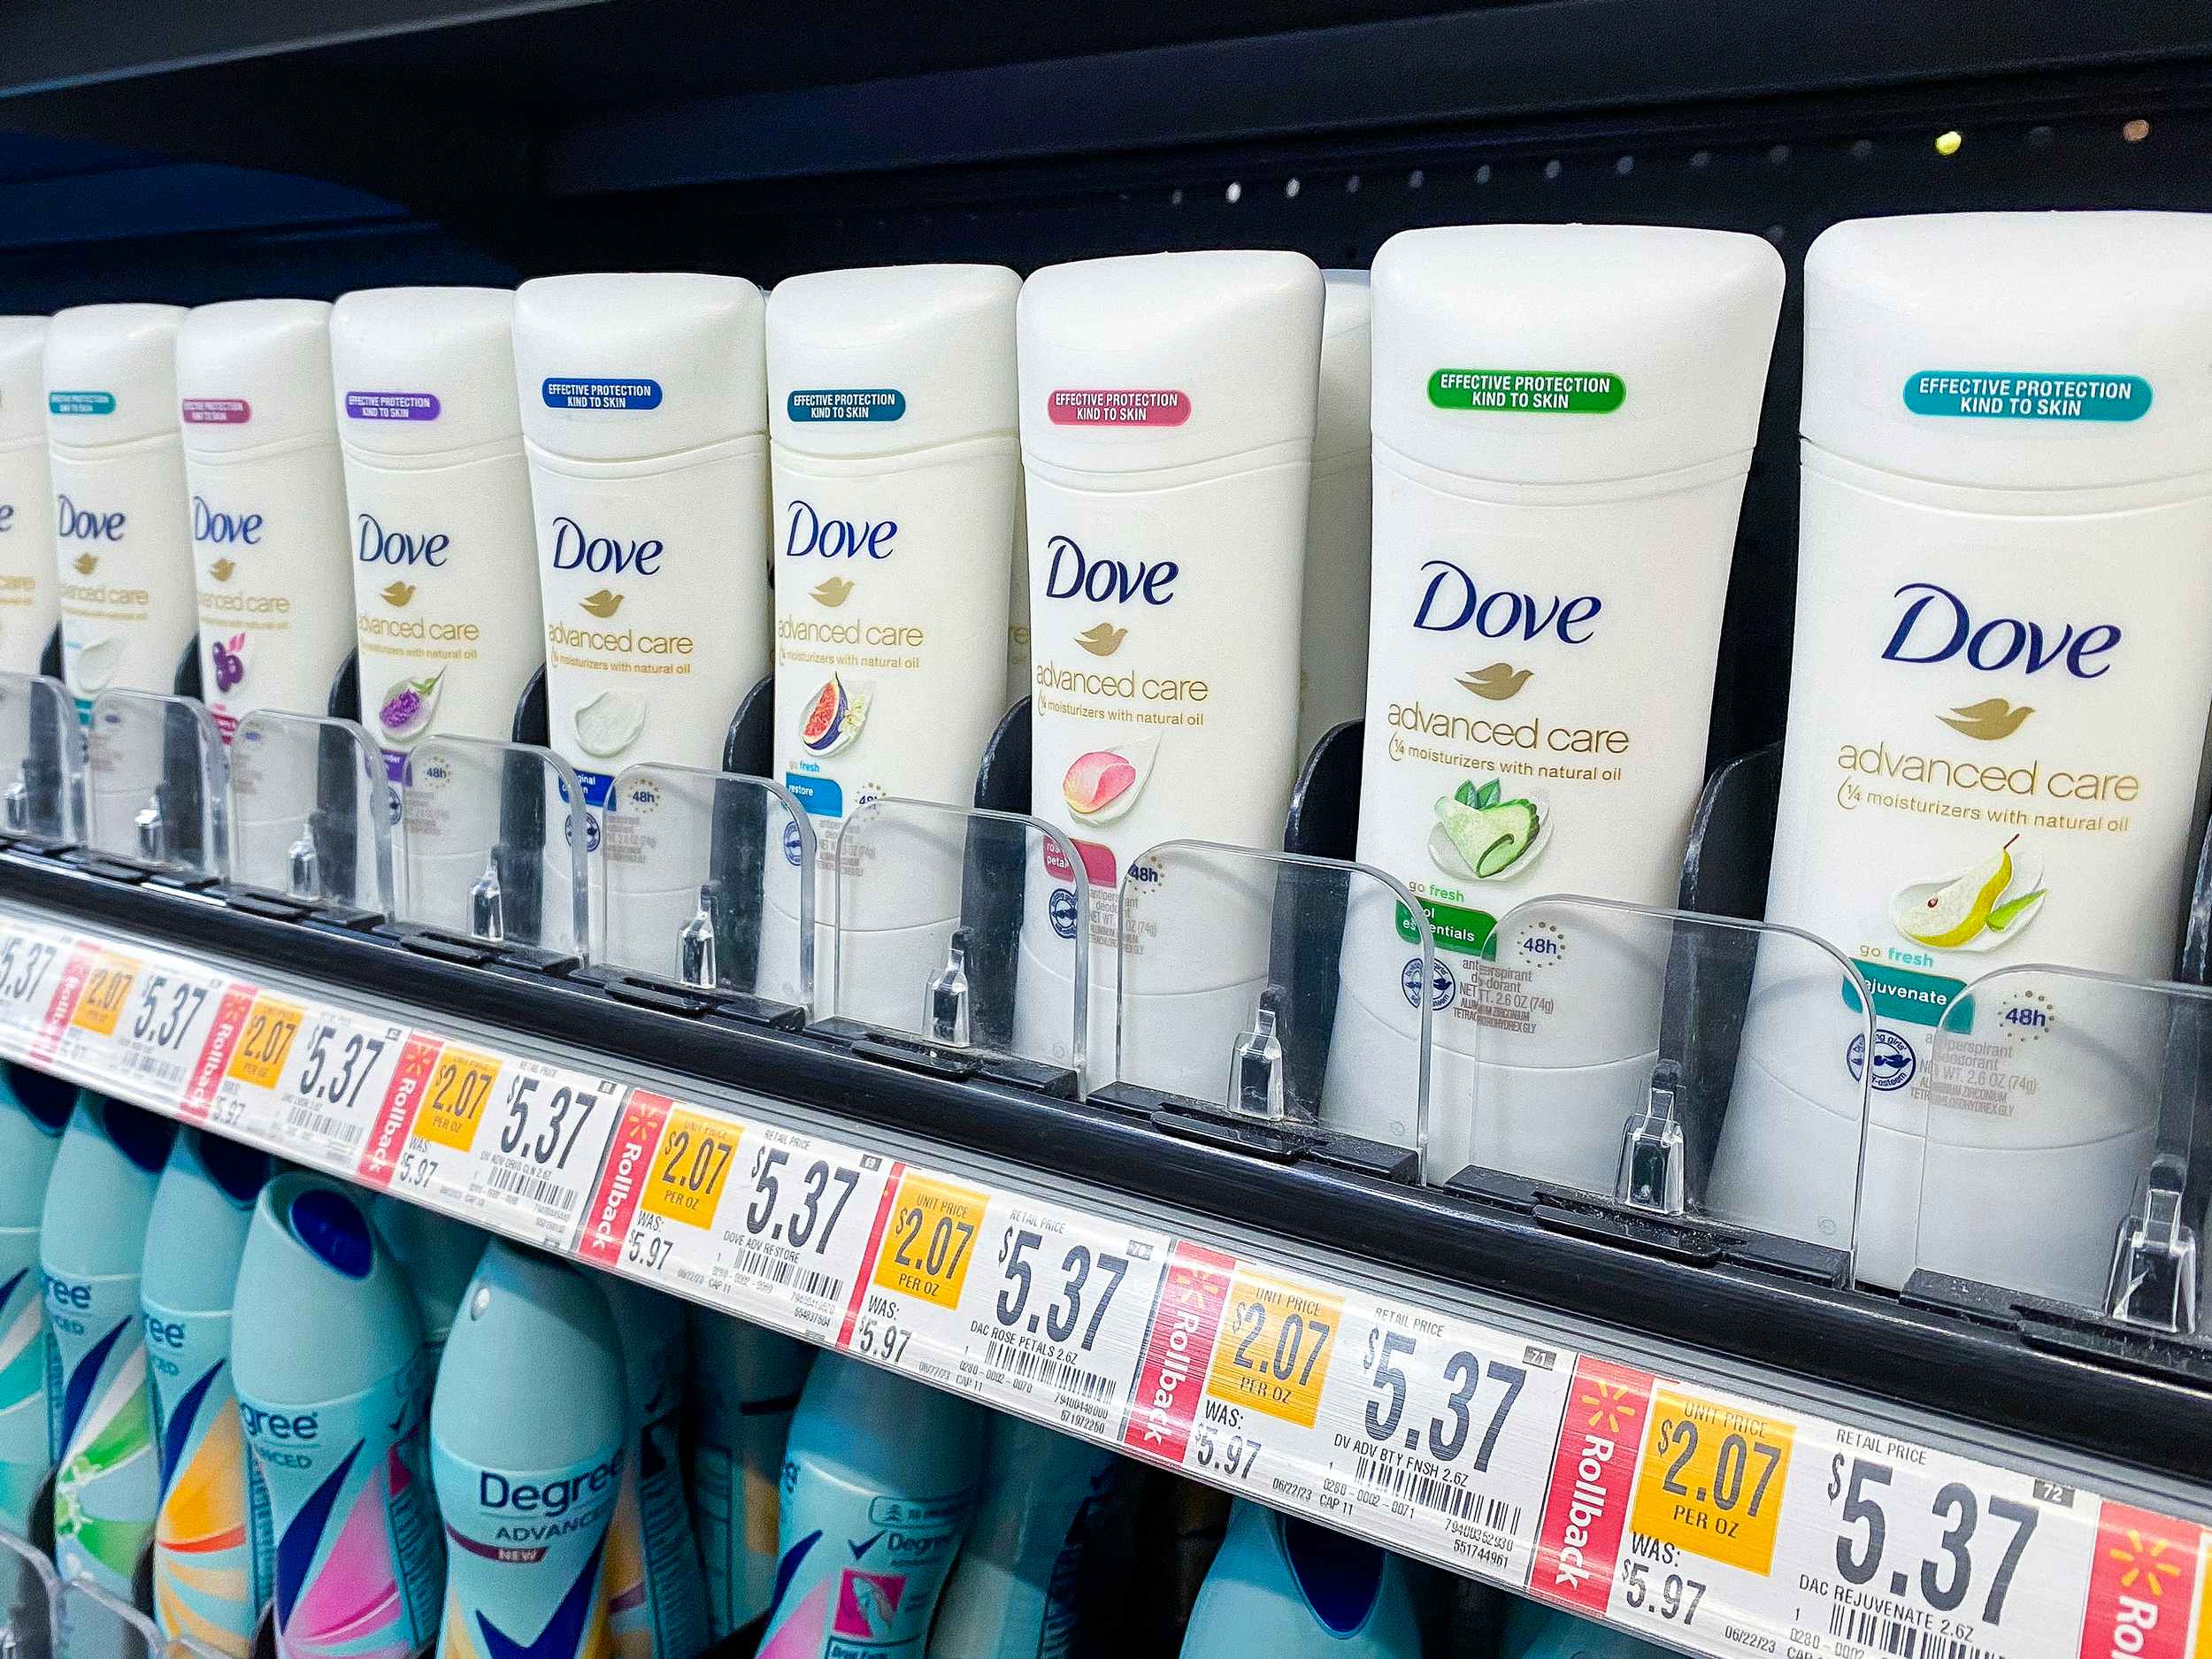 walmart shelf of dove advanced care deodorant sticks with prices